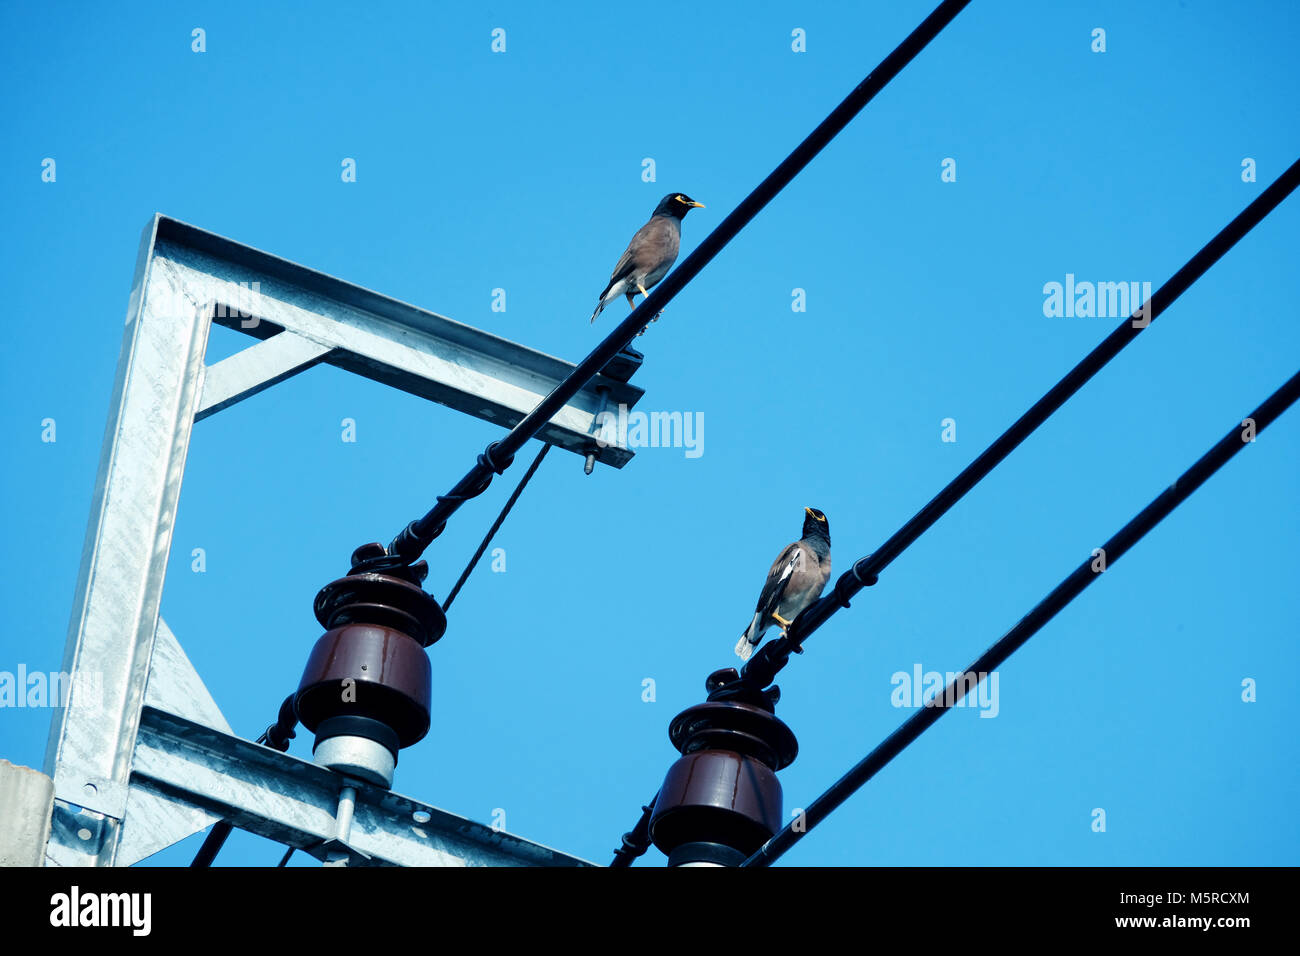 Dos aves paloma stand sobre cables eléctricos con cleary blue sky, disparo horizontal Foto de stock